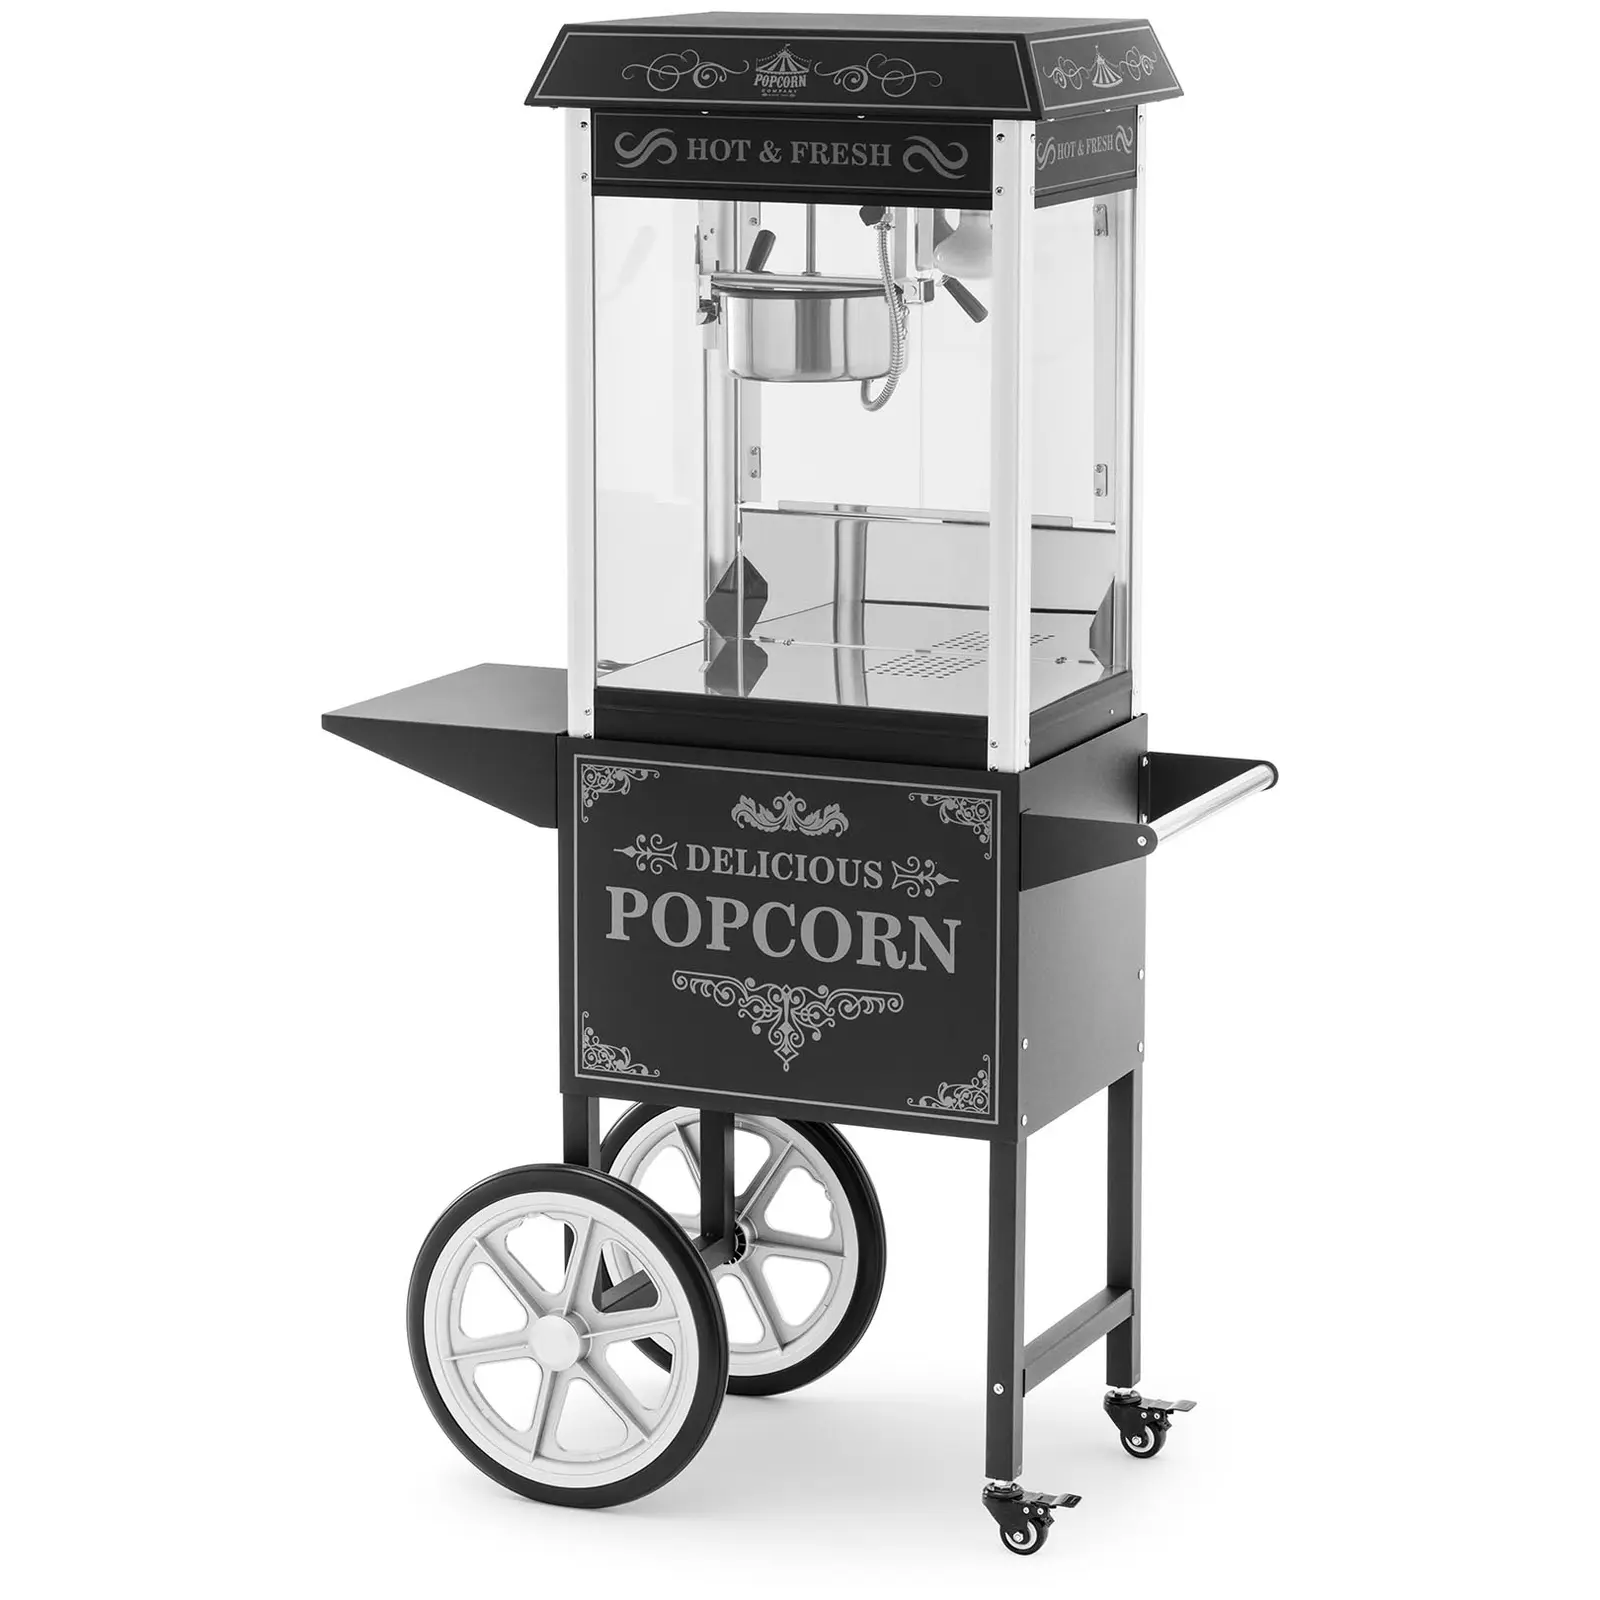 Popcornmaskin med vagn - Retrodesign - 150 / 180 - °C - Svart - Royal Catering